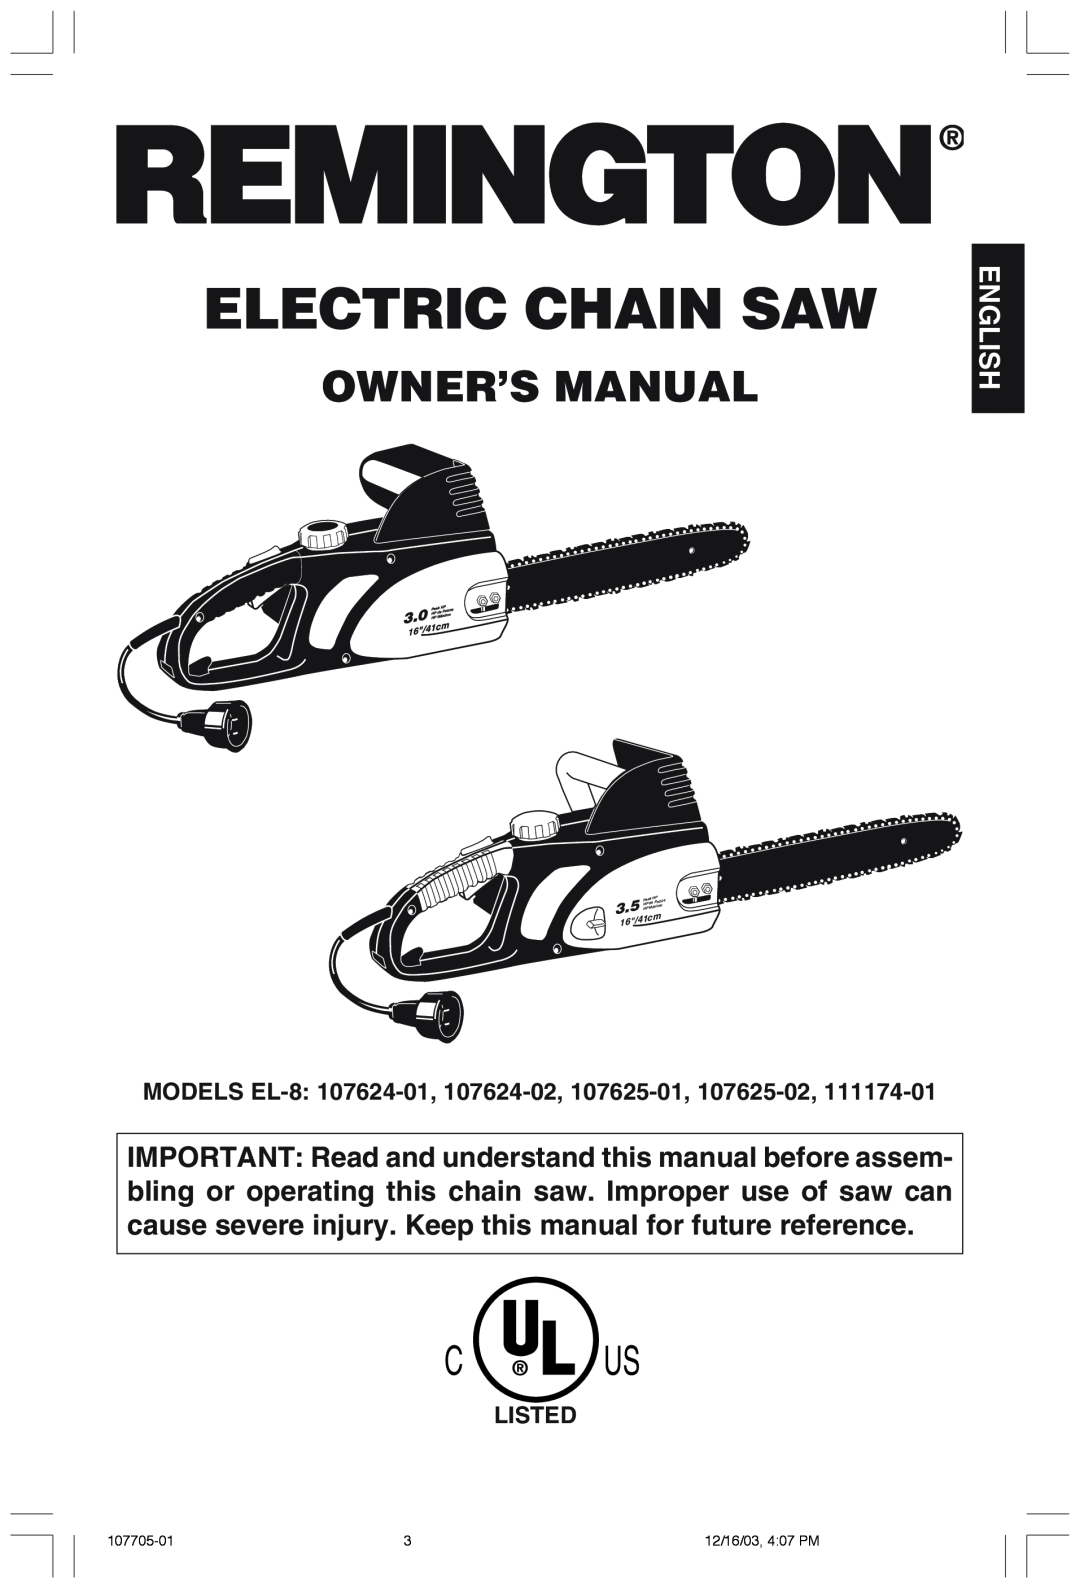 Desa 107624-01 Electric Chain Saw, C¨ Us, Listed, Owner’S Manual, 107705-01, 12/16/03, 4:07 PM, 16/41cm, Peak HP, HP M‡x 